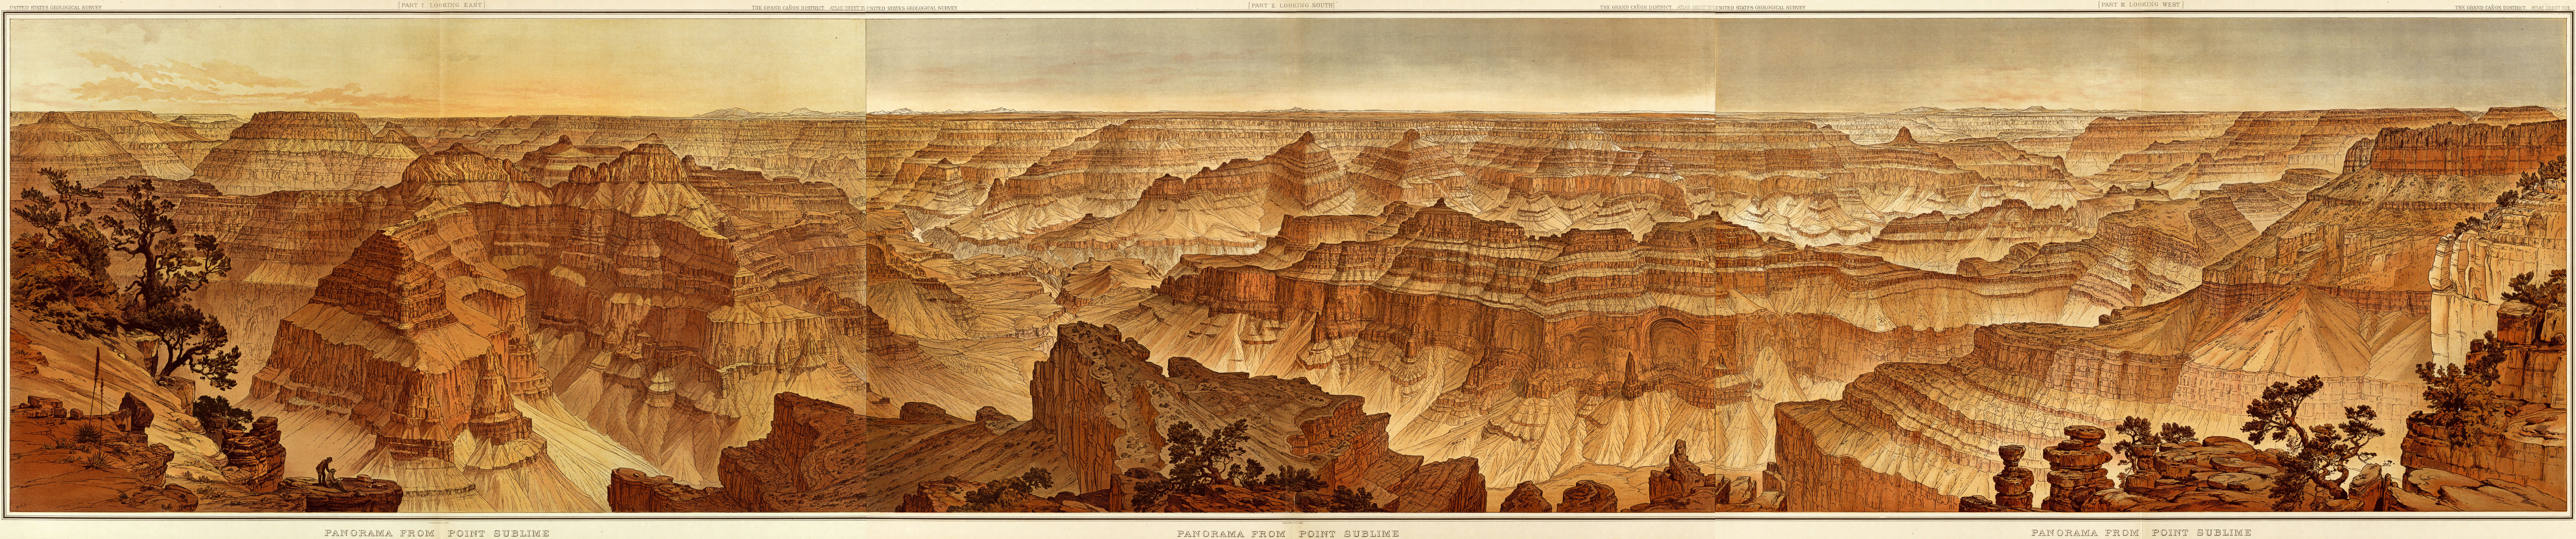 panorama-grand-canyon-sublime-holmes-illustration-small